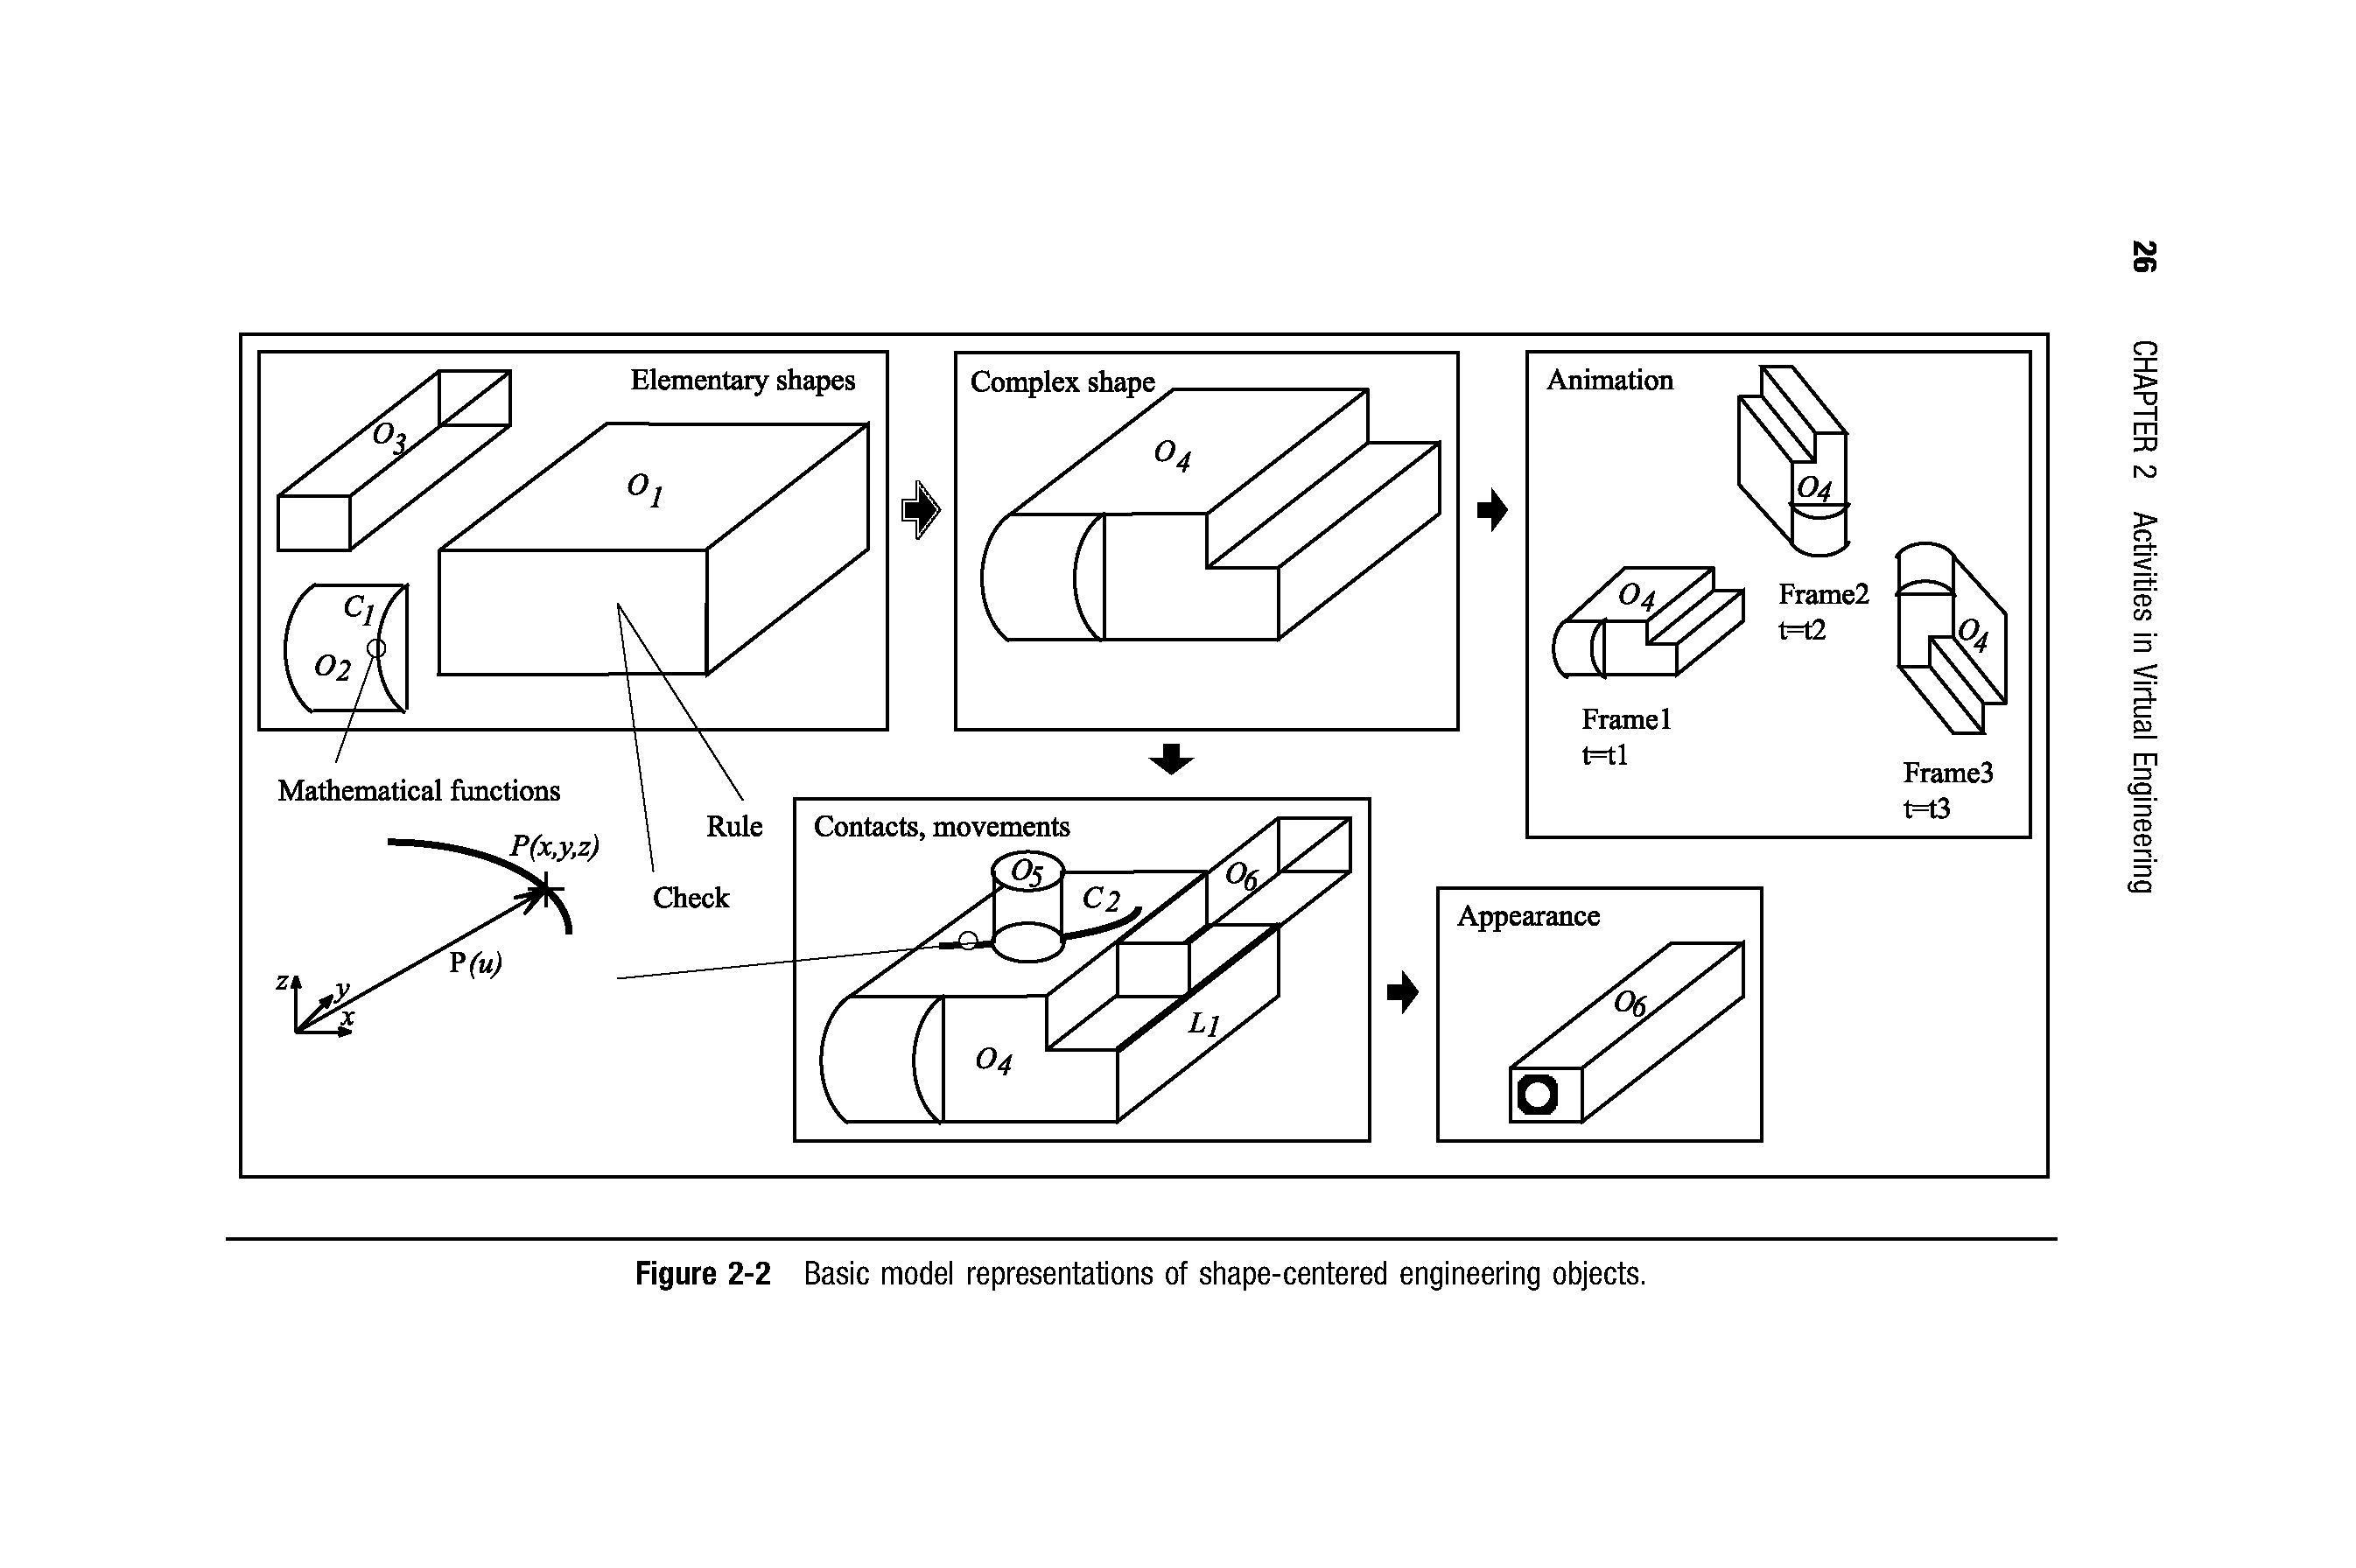 Figure 2-2 Basic model representations of shape-centered engineering objects.